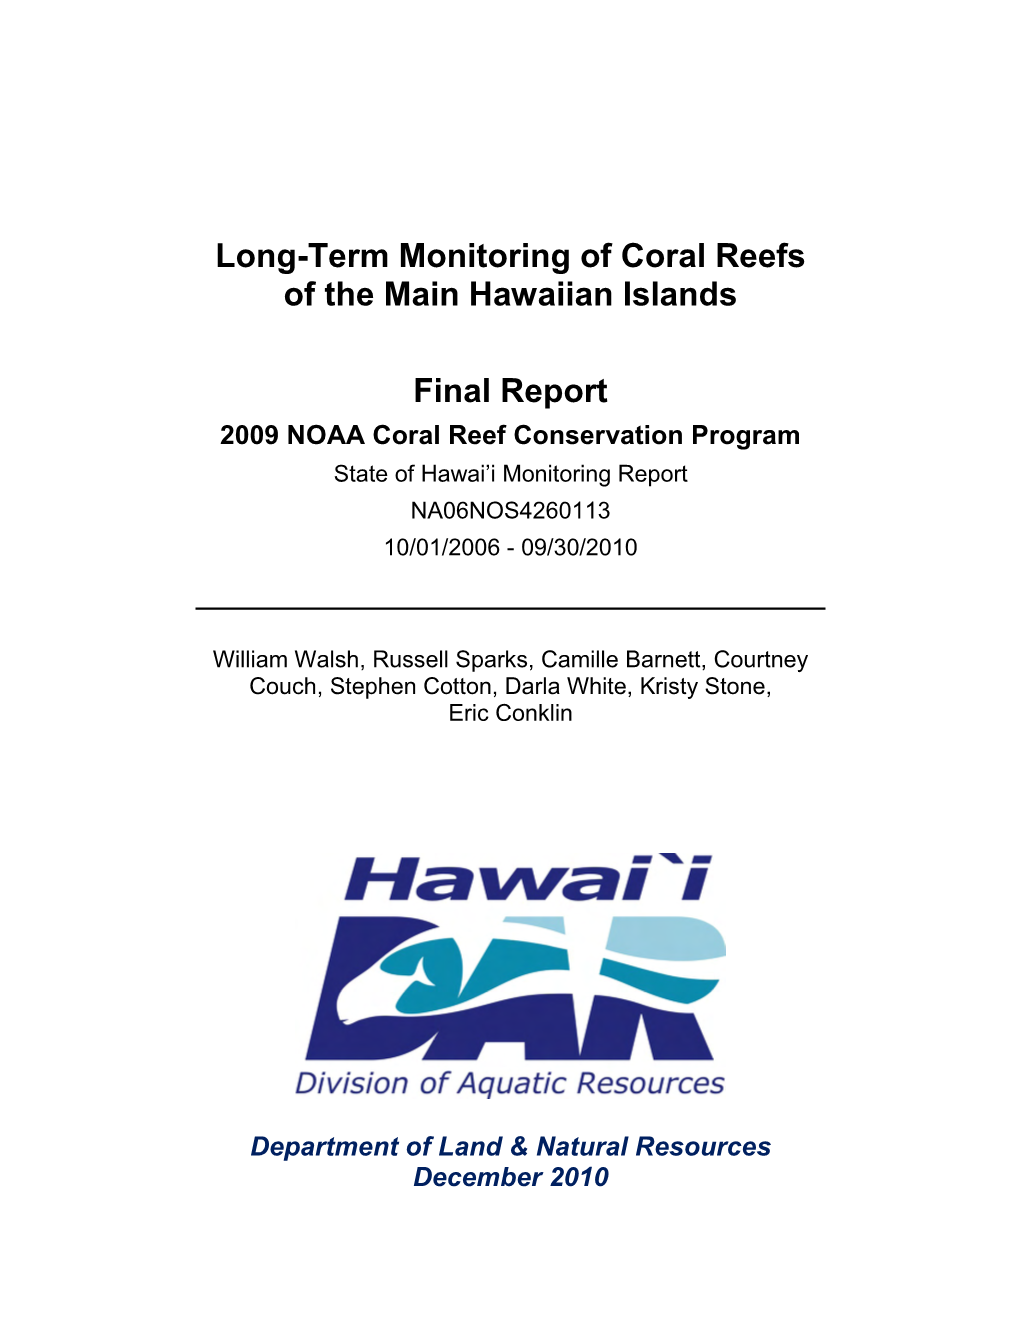 Long-Term Monitoring of Coral Reefs of the Main Hawaiian Islands